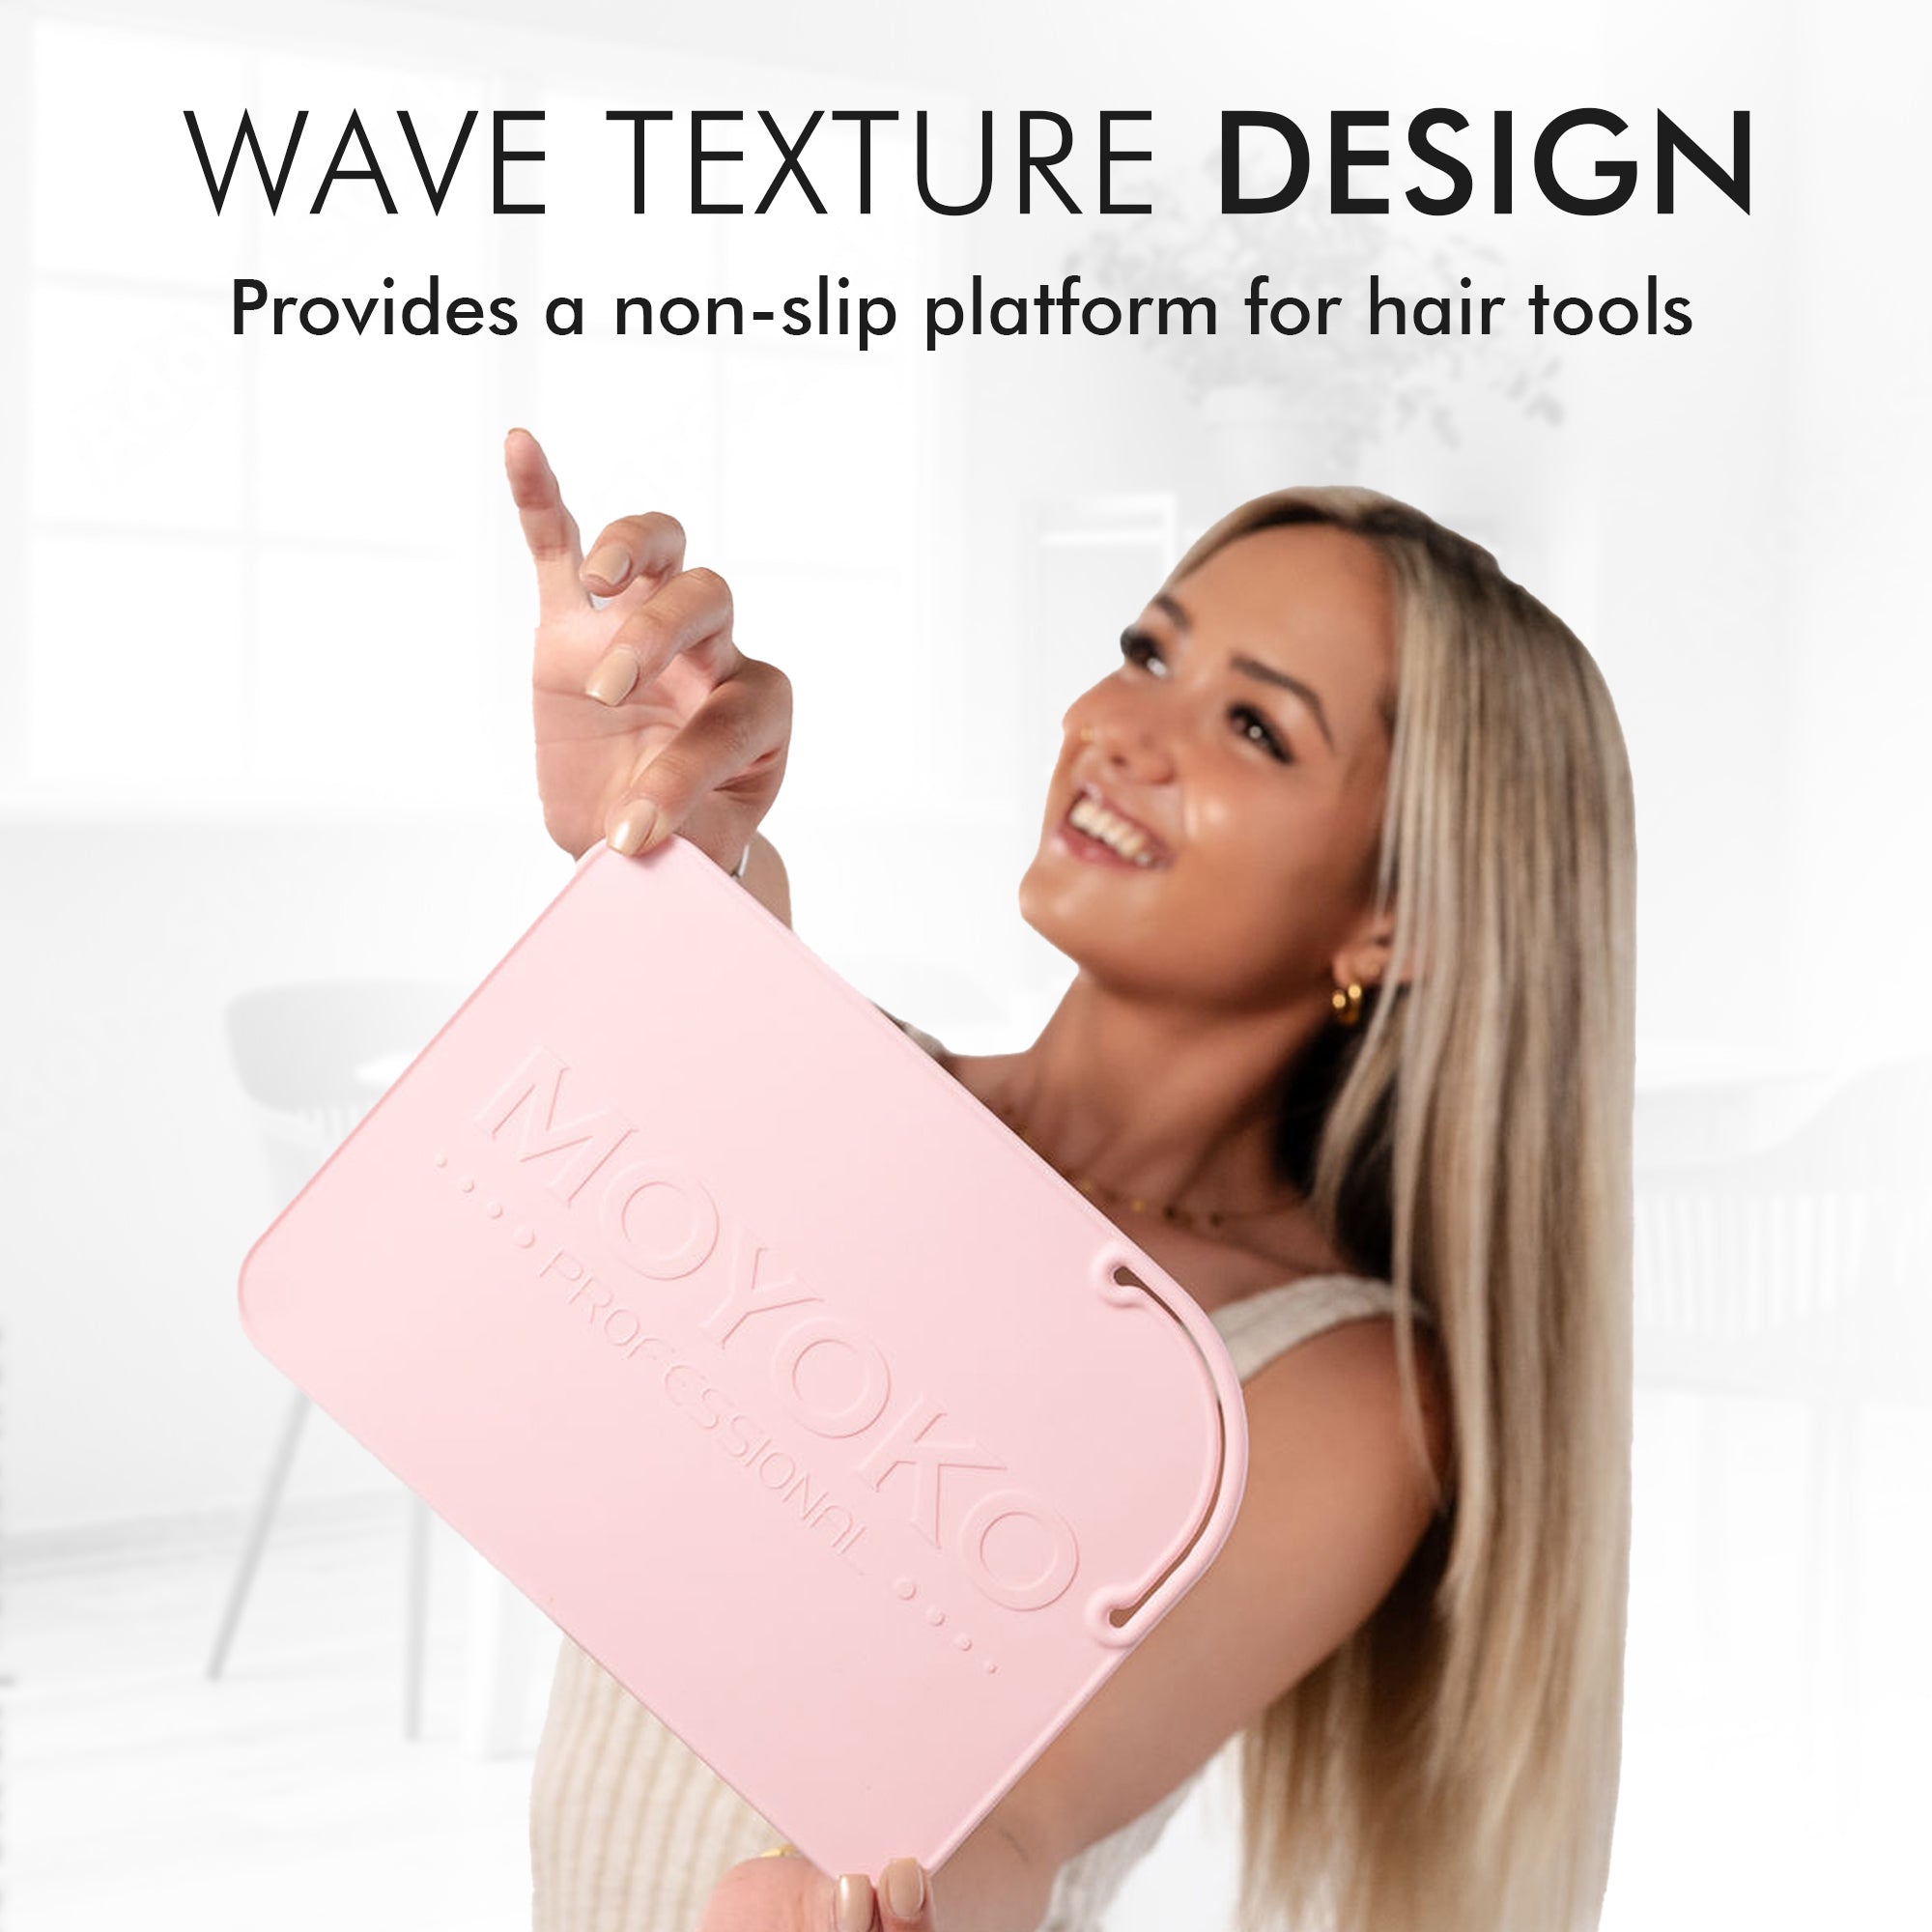 Moyoko Professional Heat Resistant Silicone Mat - Pink